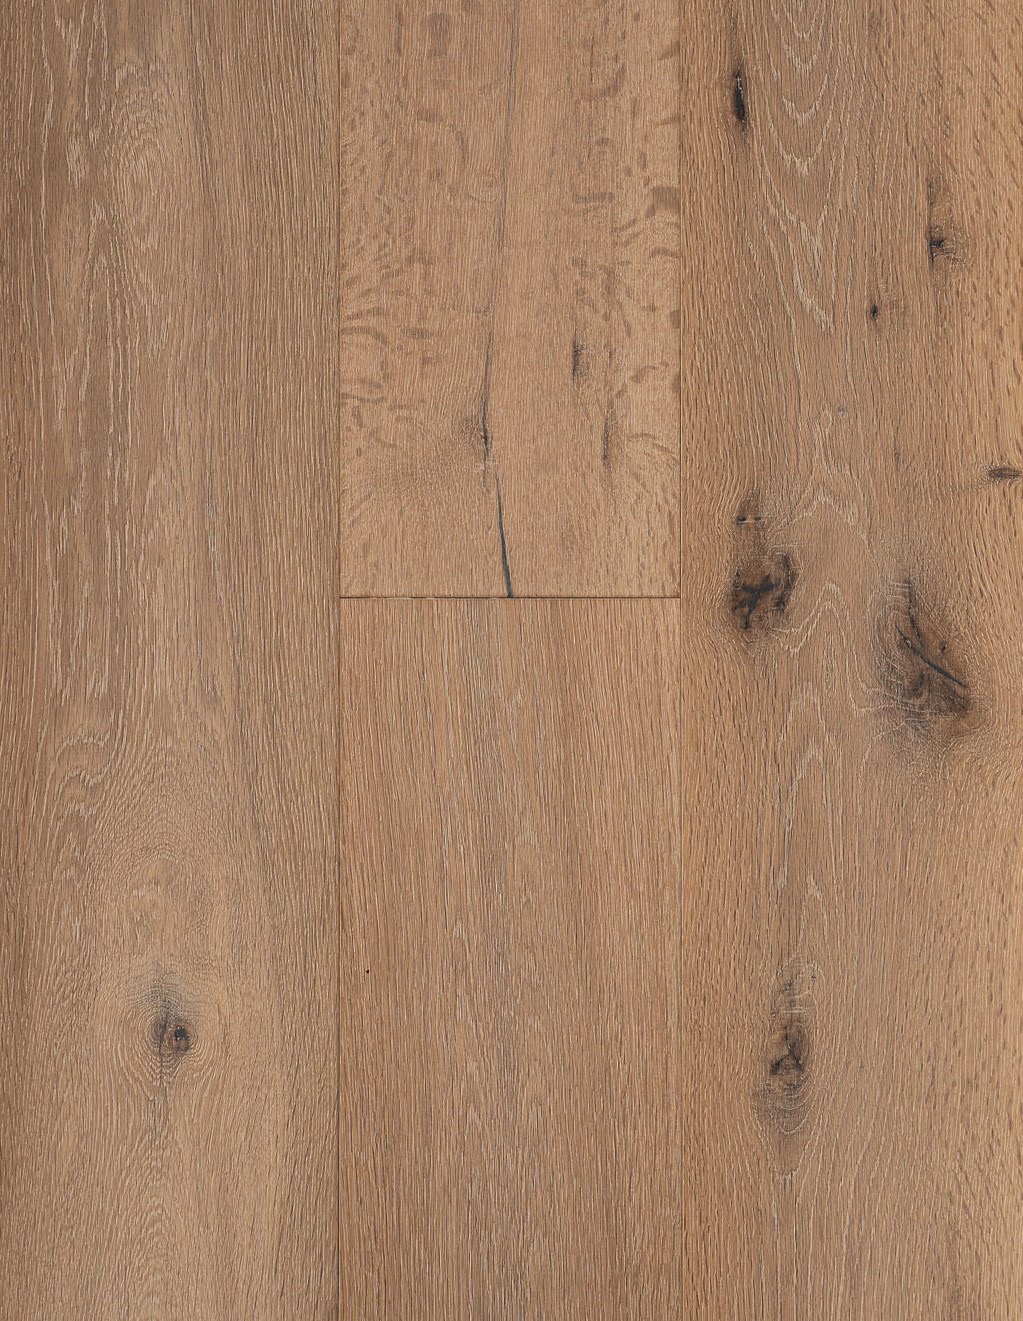 Birol Northernst Flooring European Oak Wirebrushed  Living Wood Engineered Hardwood Top Layer 3MM 7 1/2 